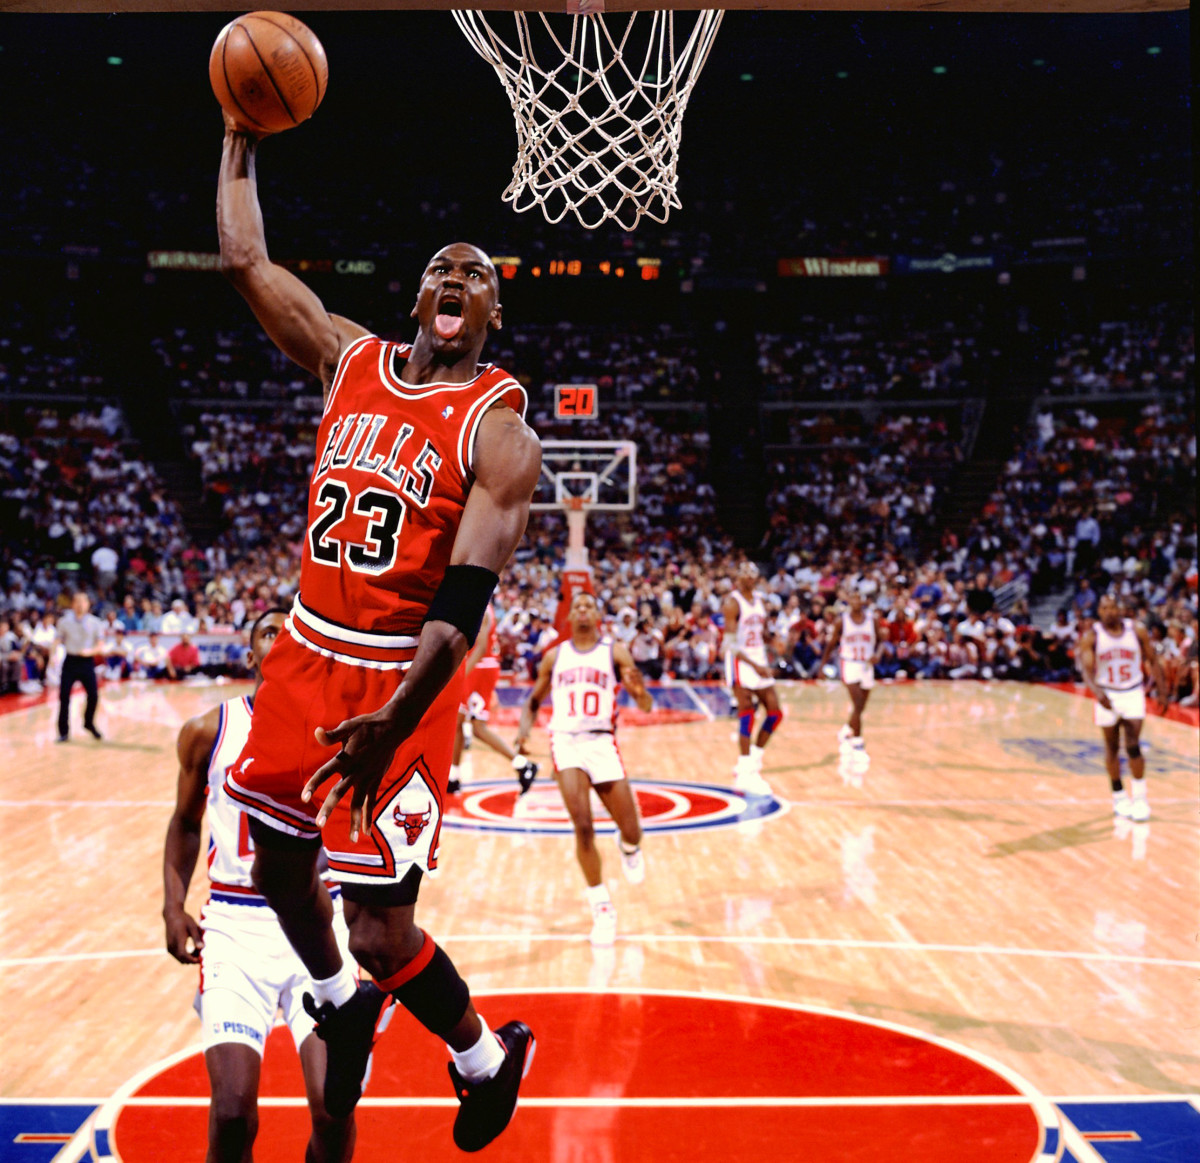 Michael Jordan dunks